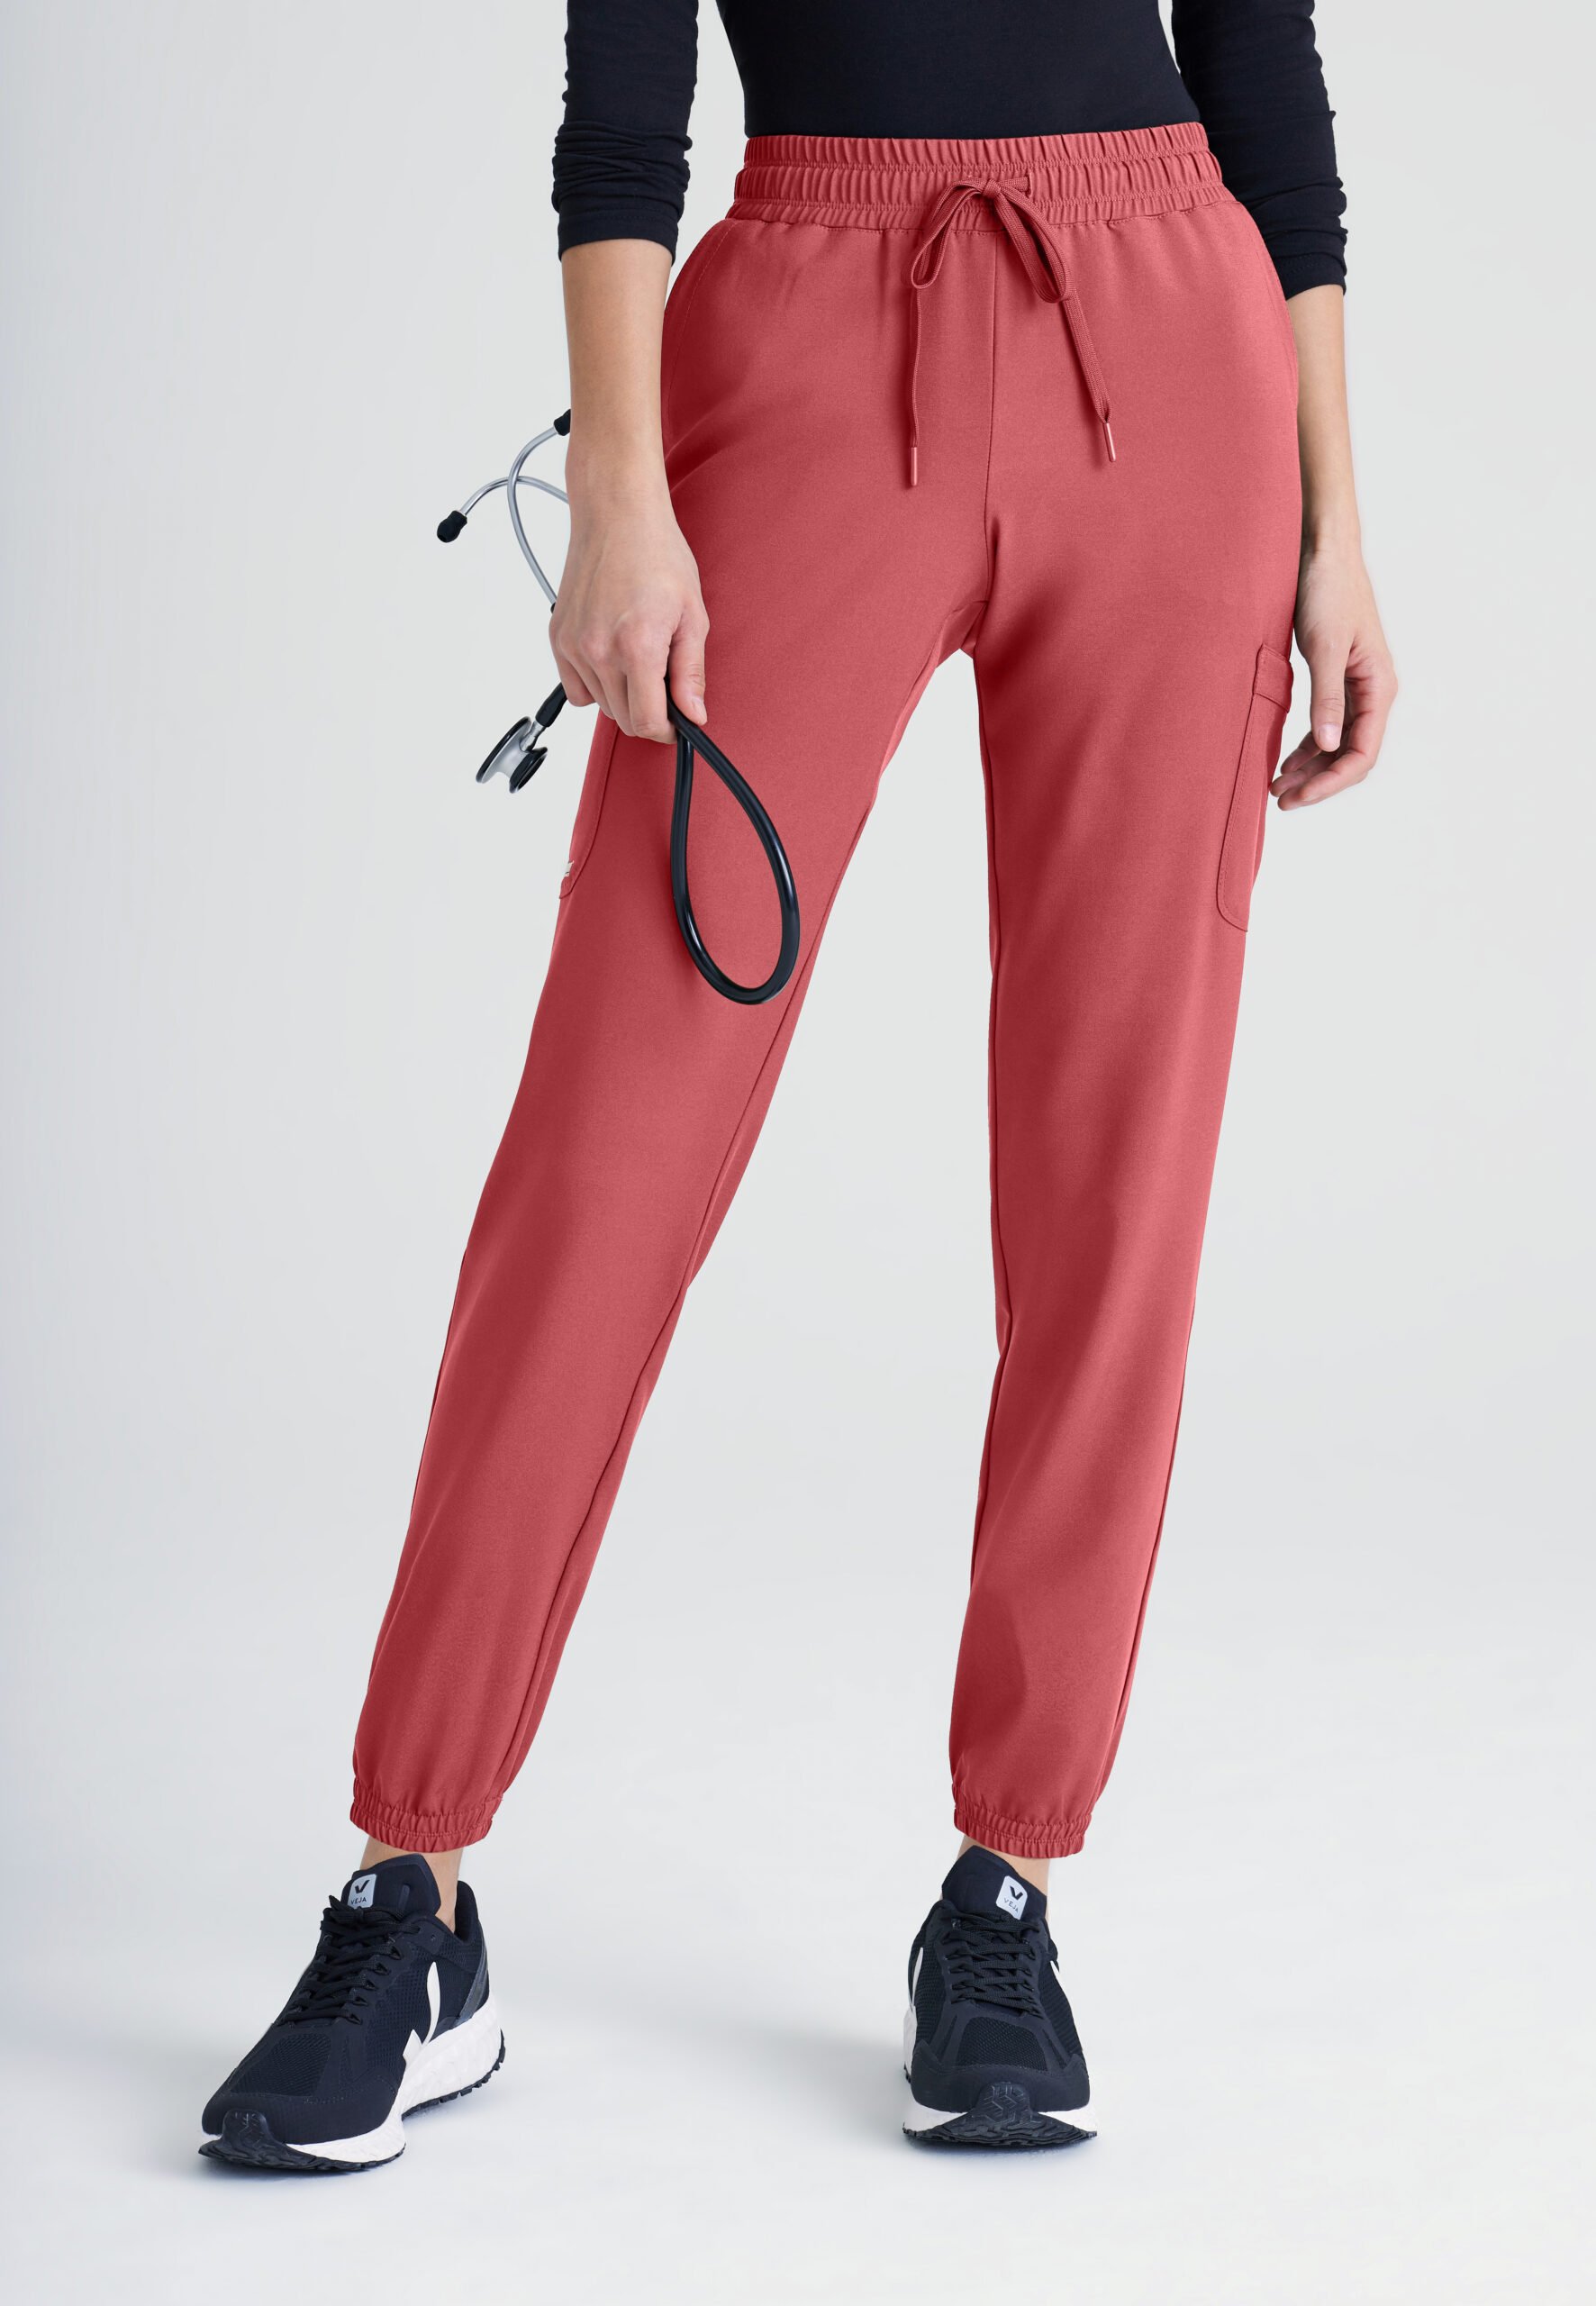 Grey's Anatomy Classic GRP534P Kira Jogger Scrub Petite Pant For Women's